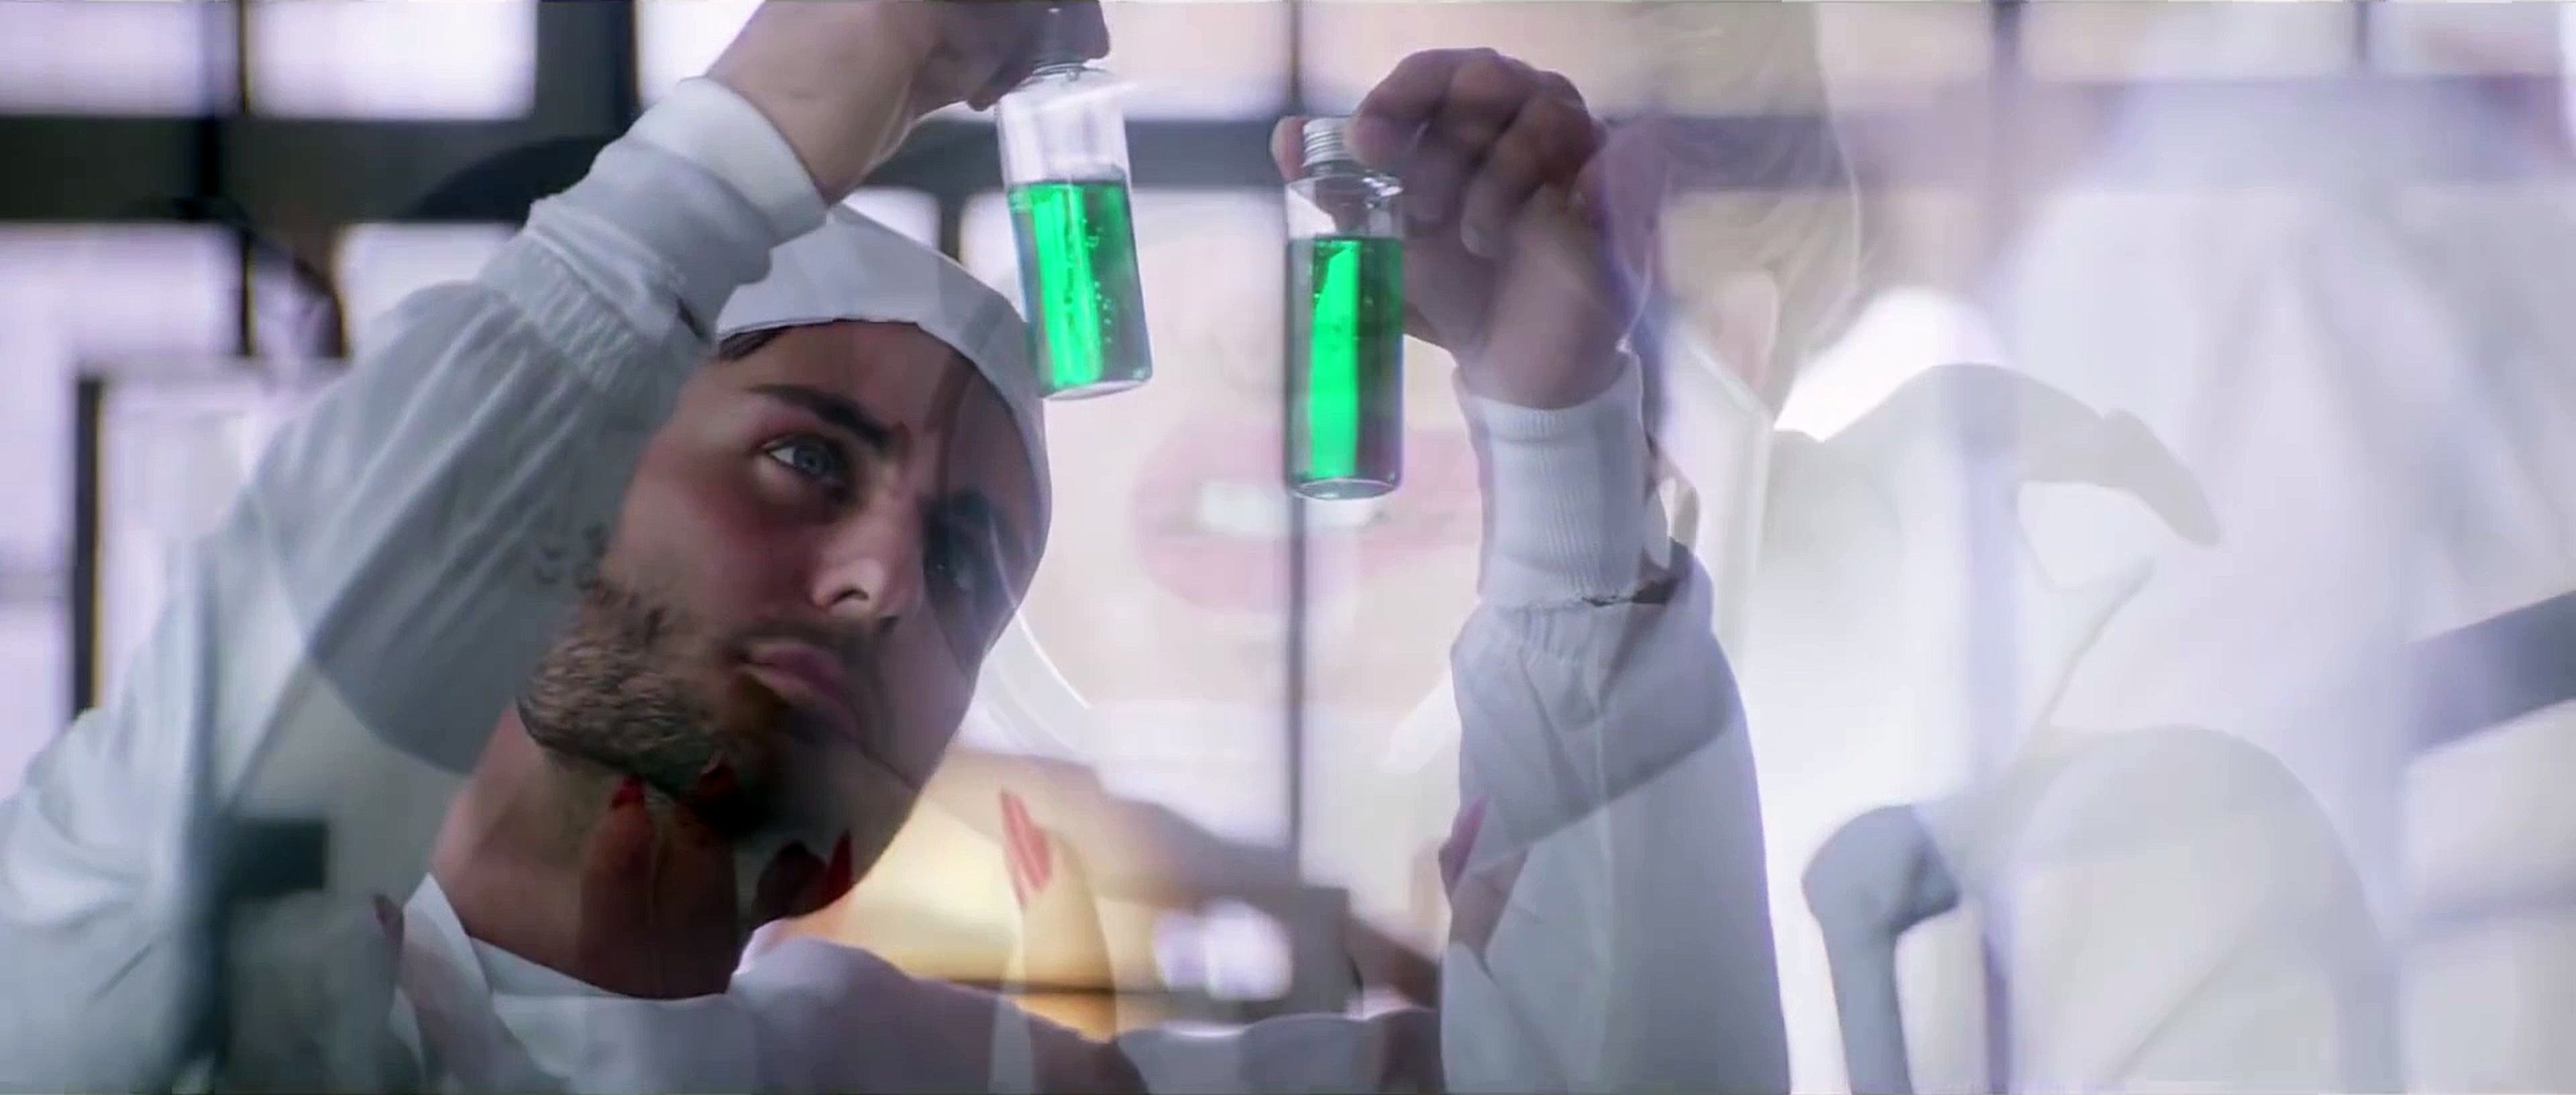 Clip viral de Zoolander 2 - "Youth Milk Commercial"